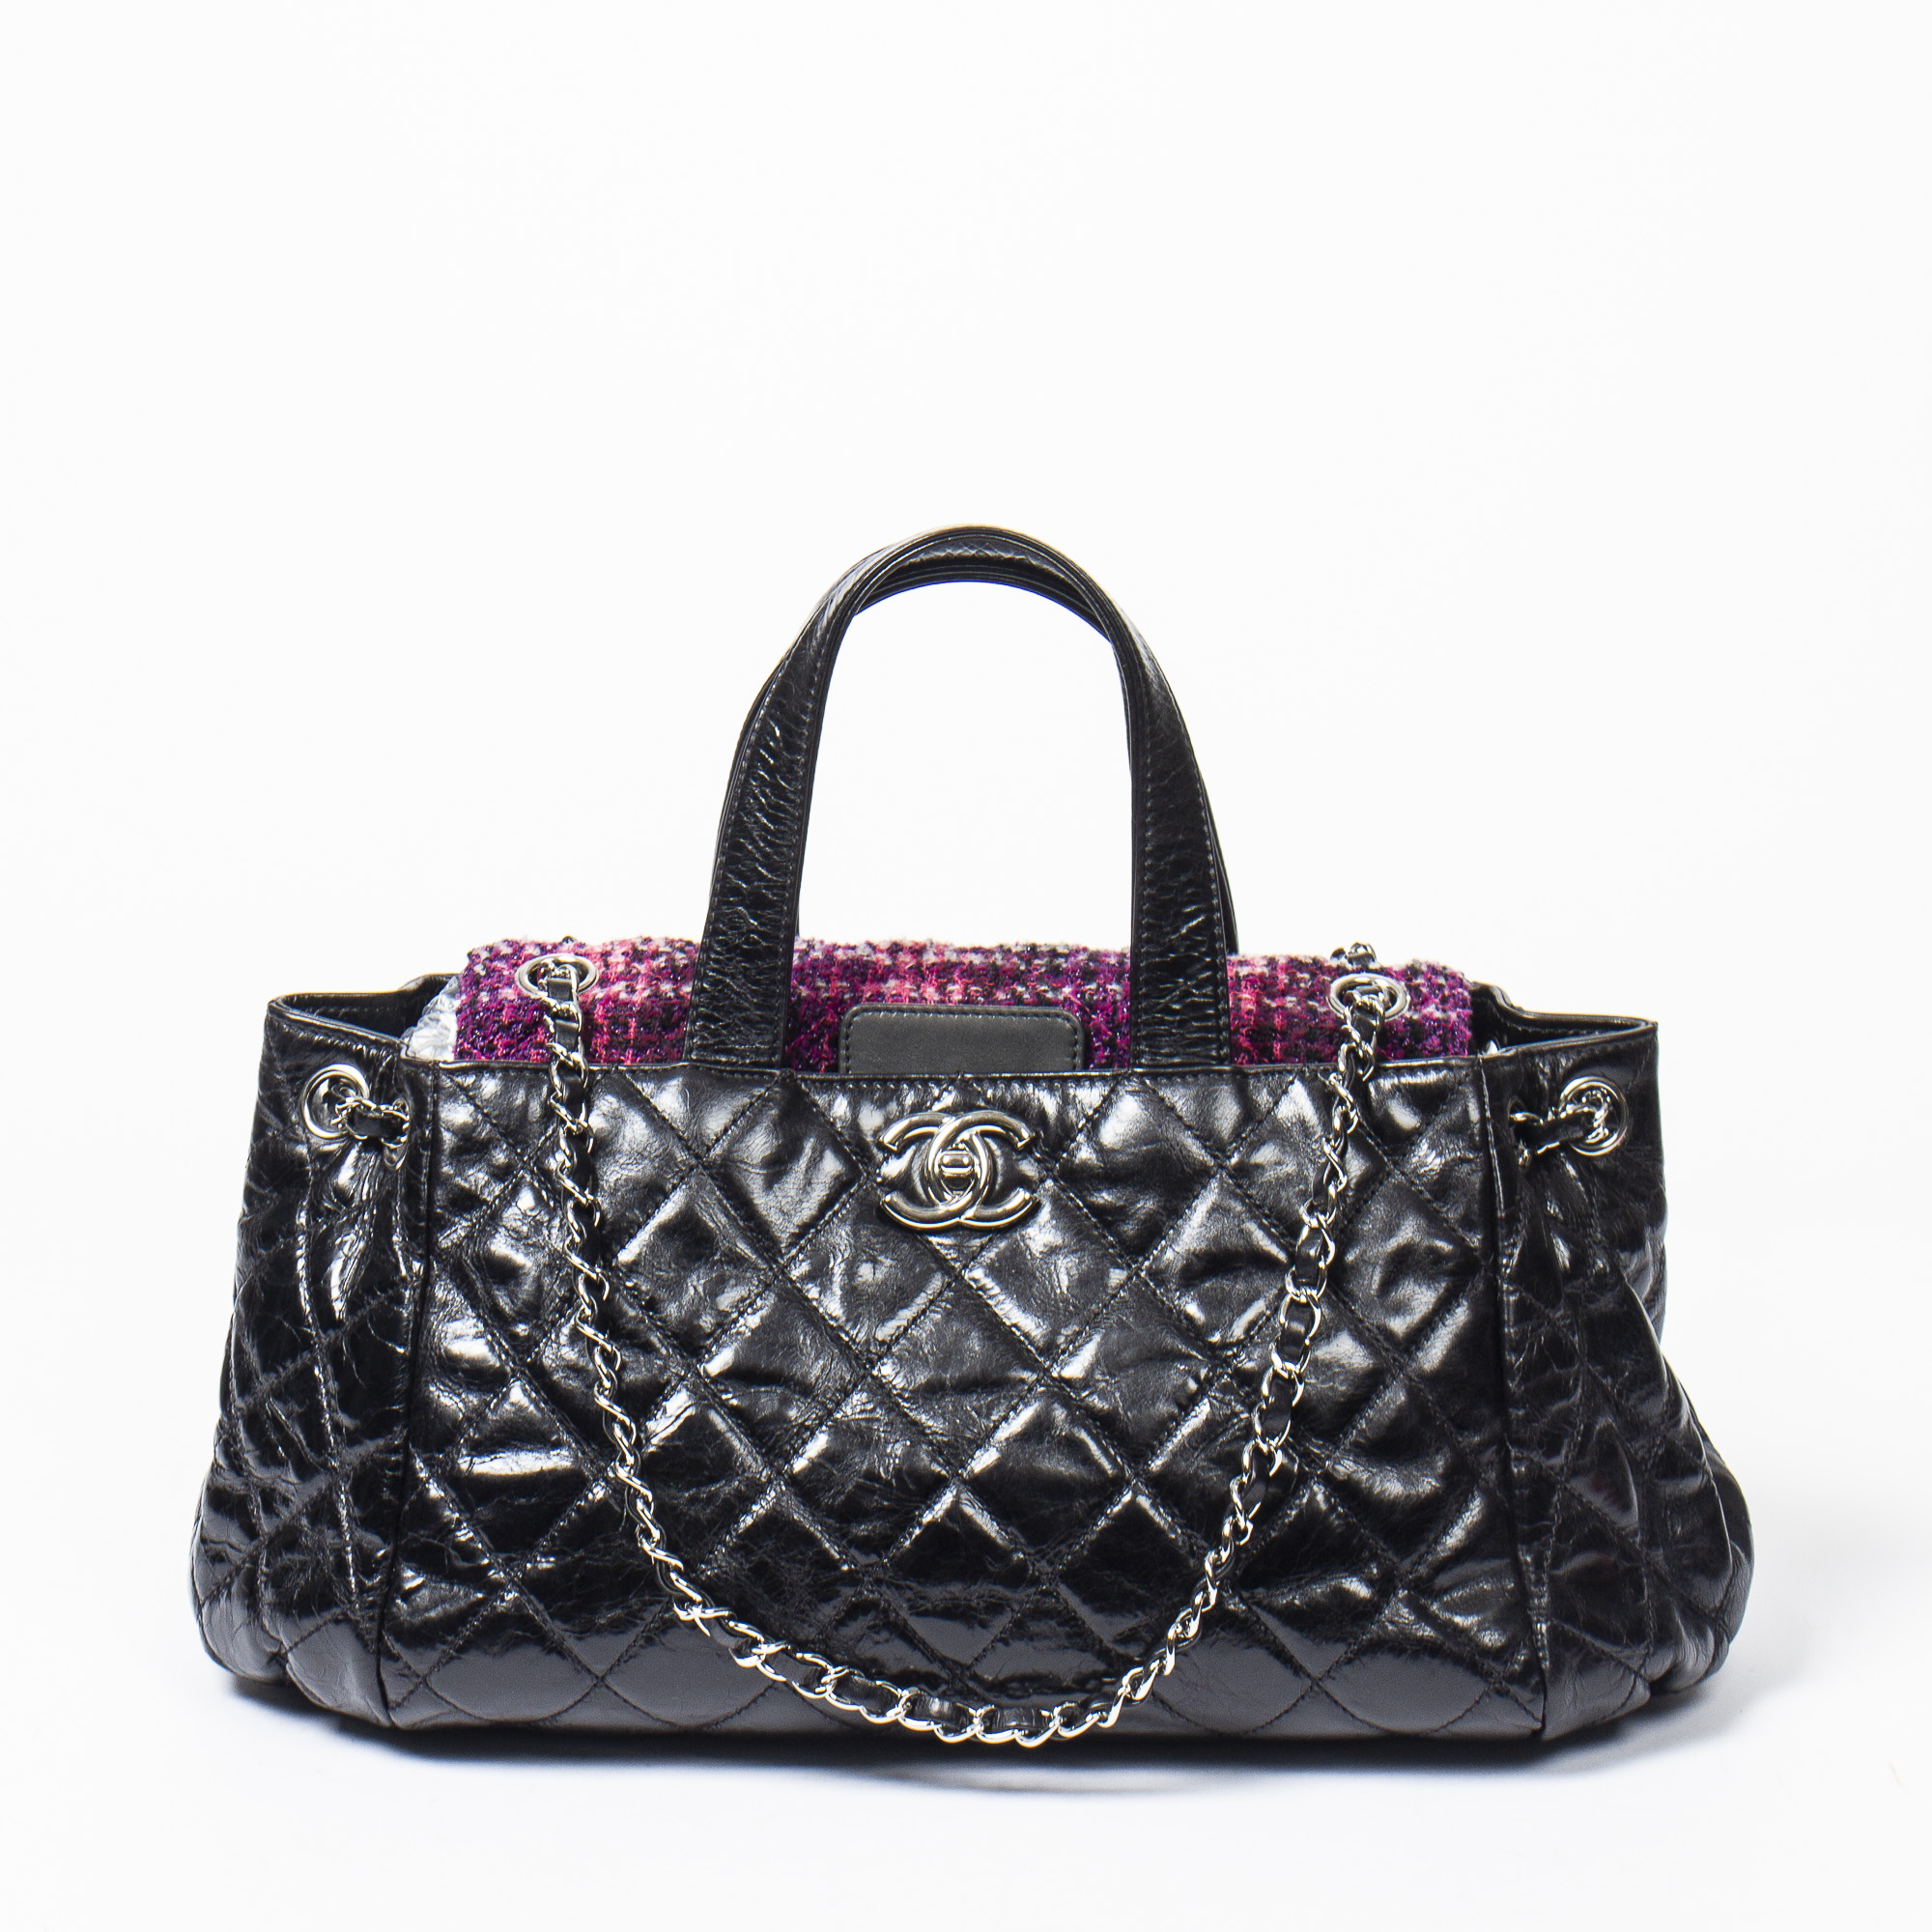 Chanel Portobello Tweed Bag